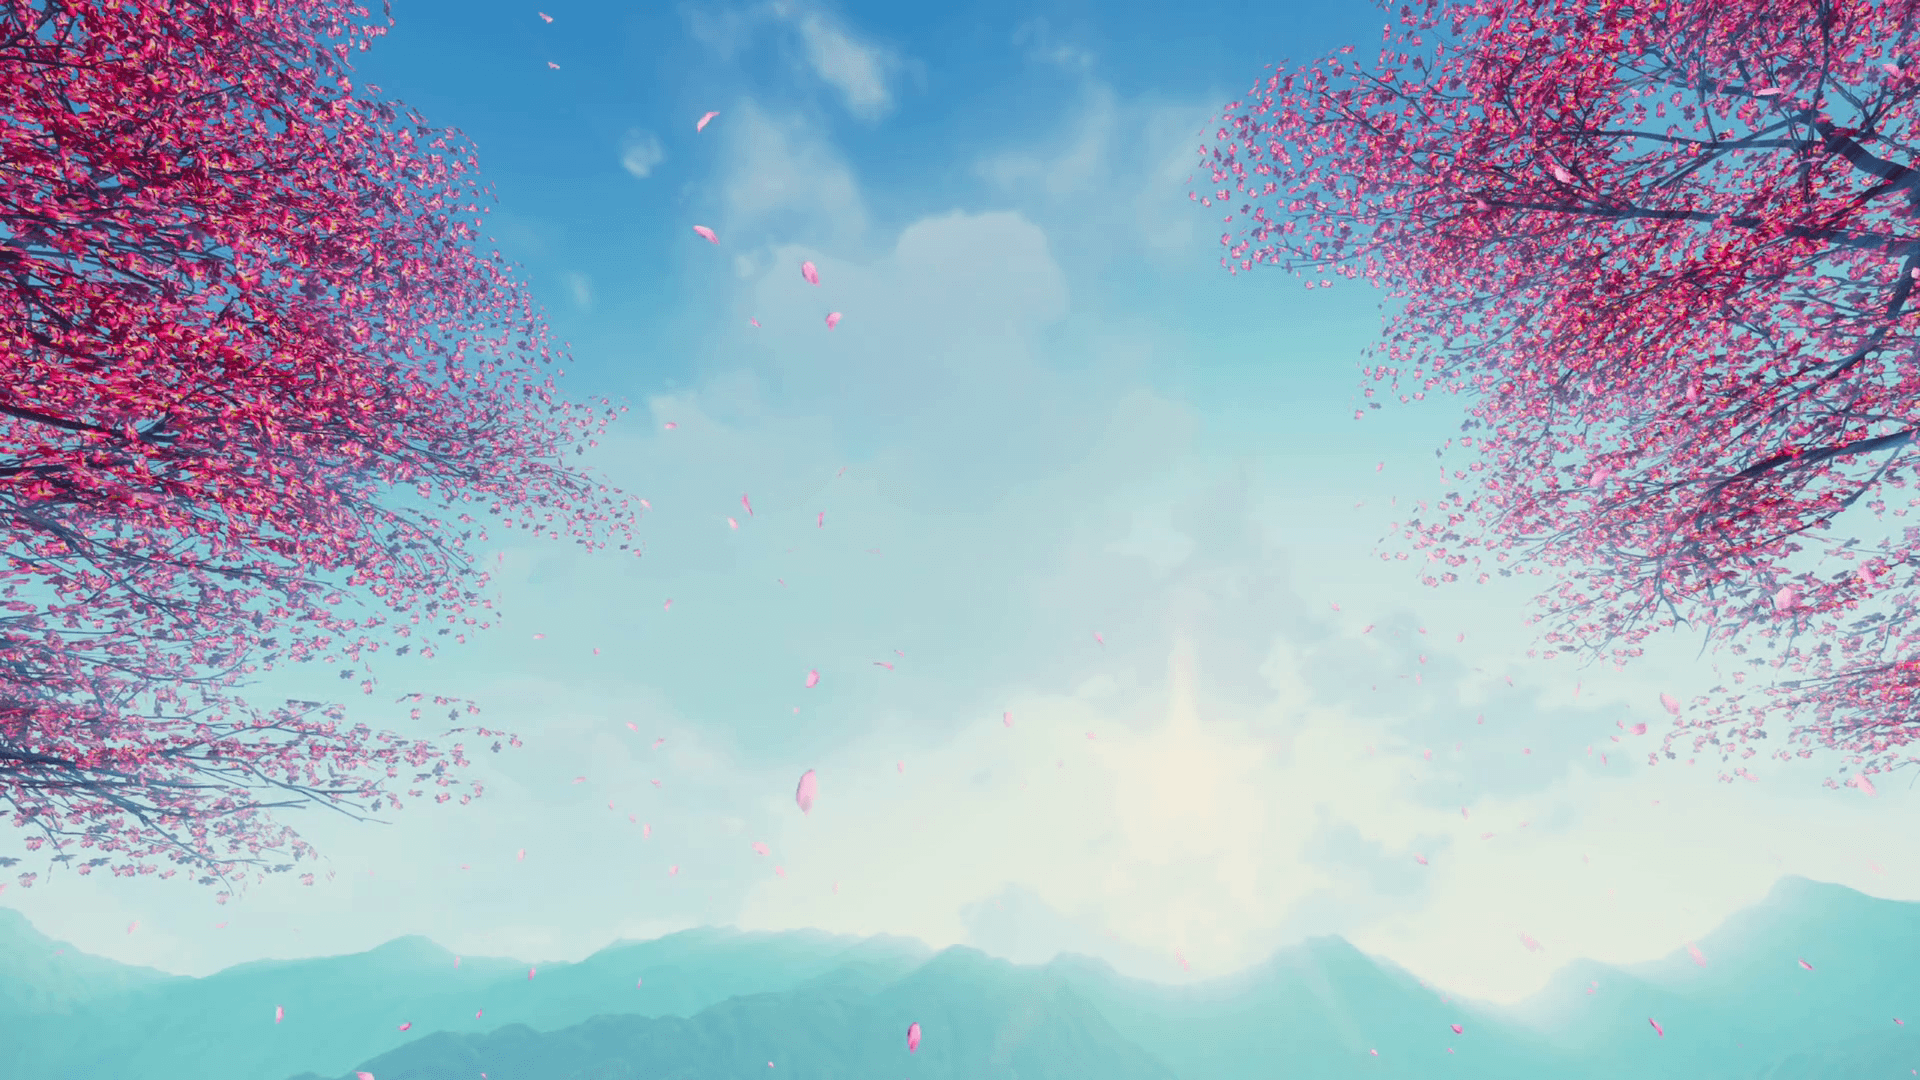 Flowering sakura cherry treetops and pink petals falling